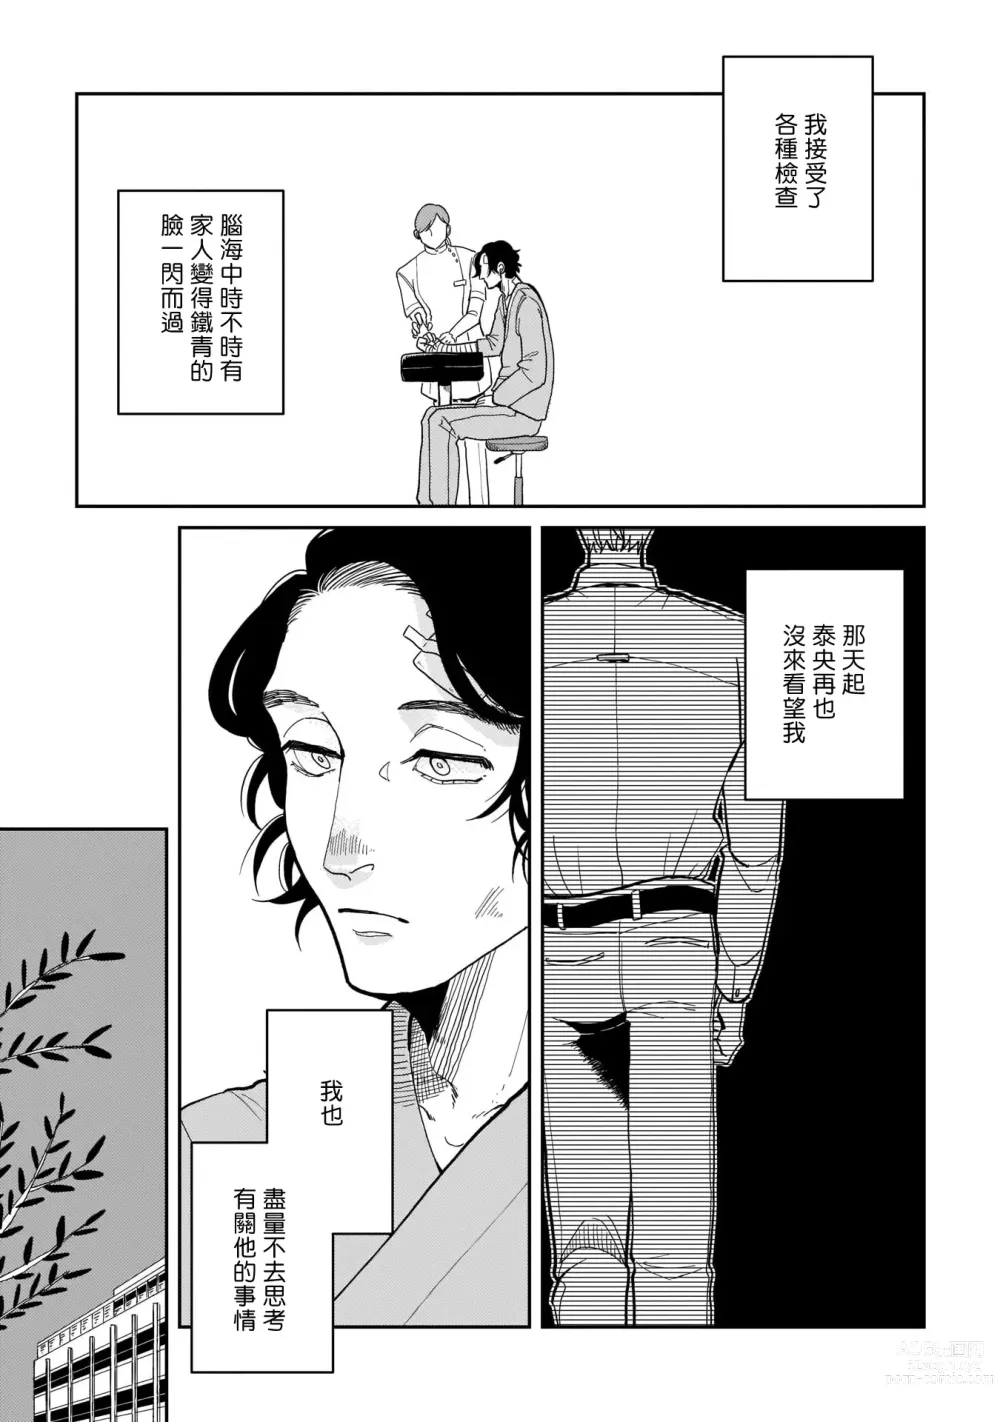 Page 9 of manga 无论疾病、还是健康 #4-6 + P站番外插图 + 番外合集1-7